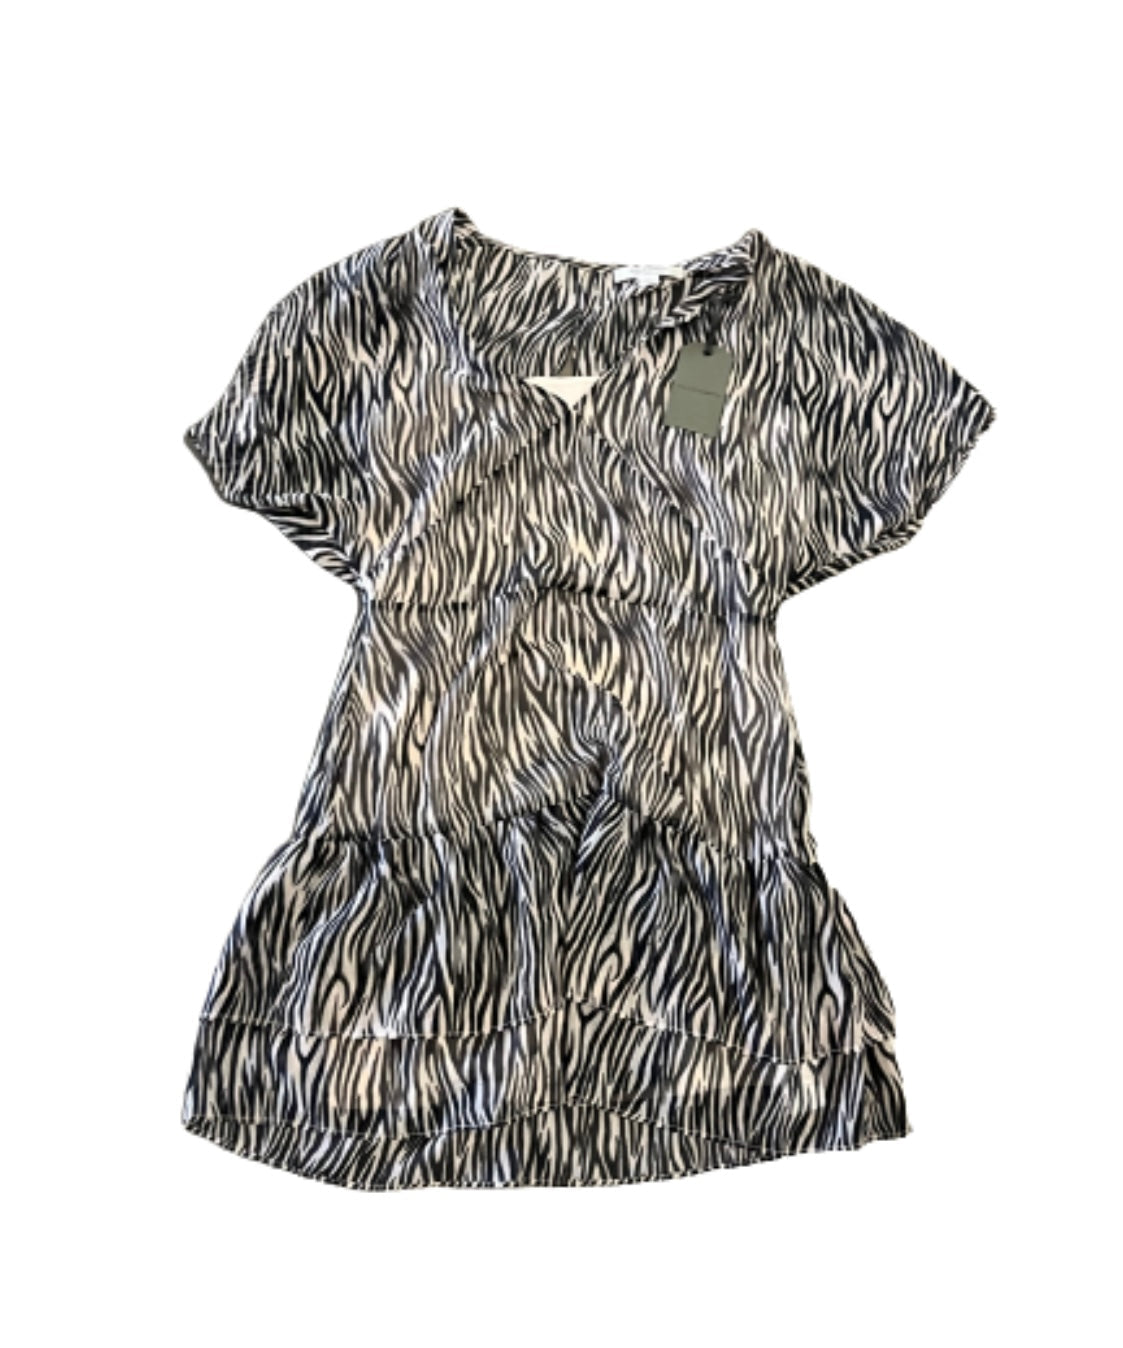 GIRLFRIENDS GUIDE TO DIVORCE: Phoebe’s All-Saints Leopard Print Dress (4)